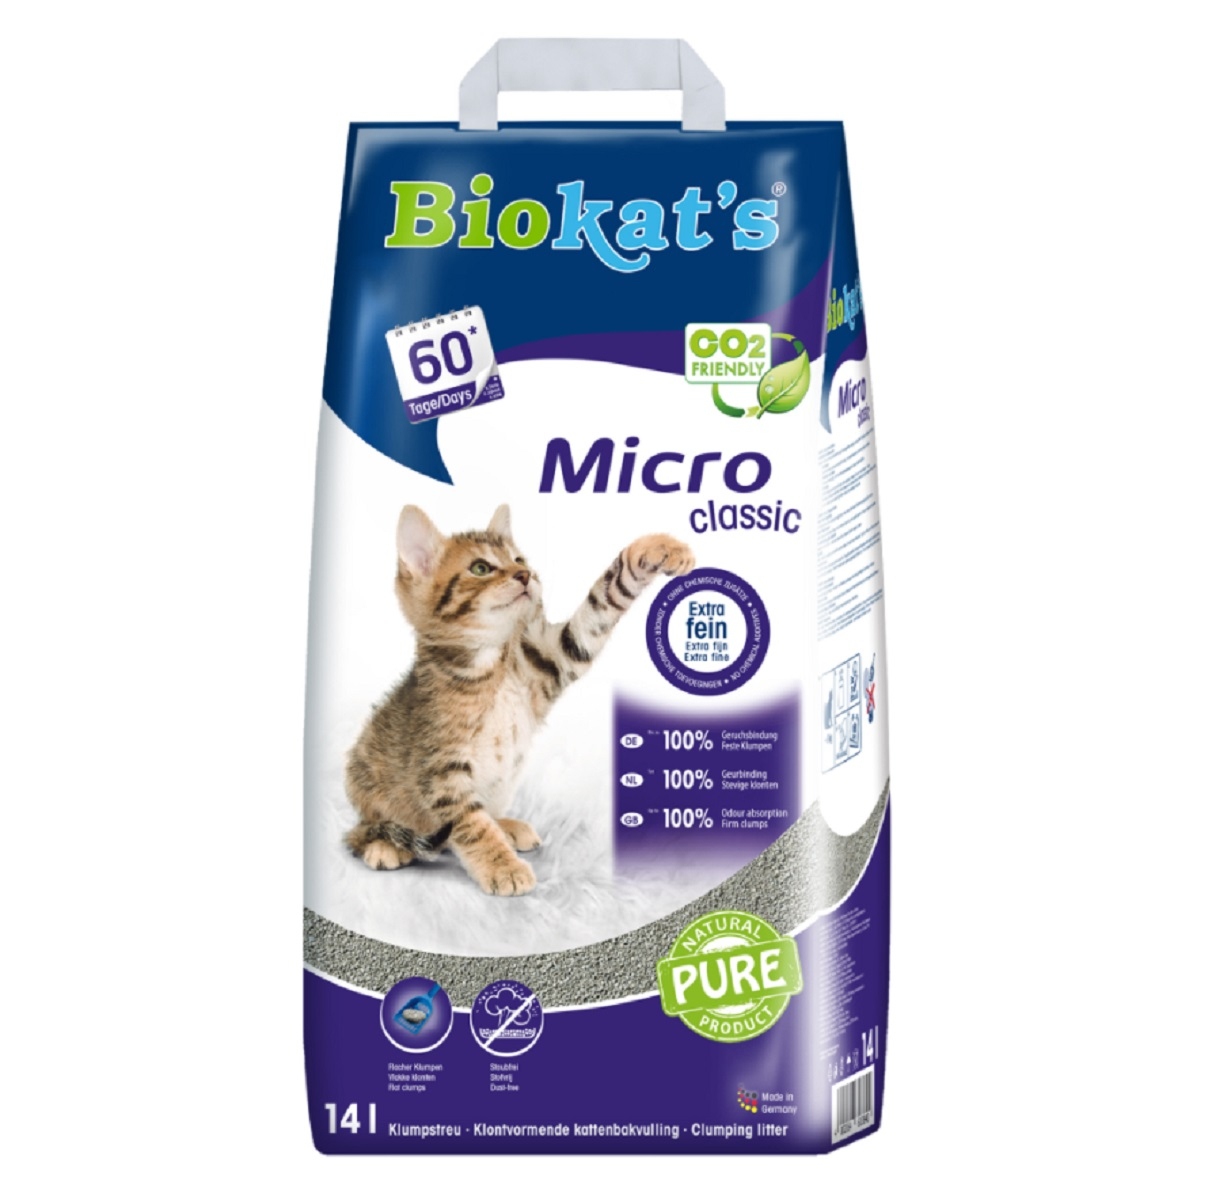 Biokat's Micro Classic Katzenstreu